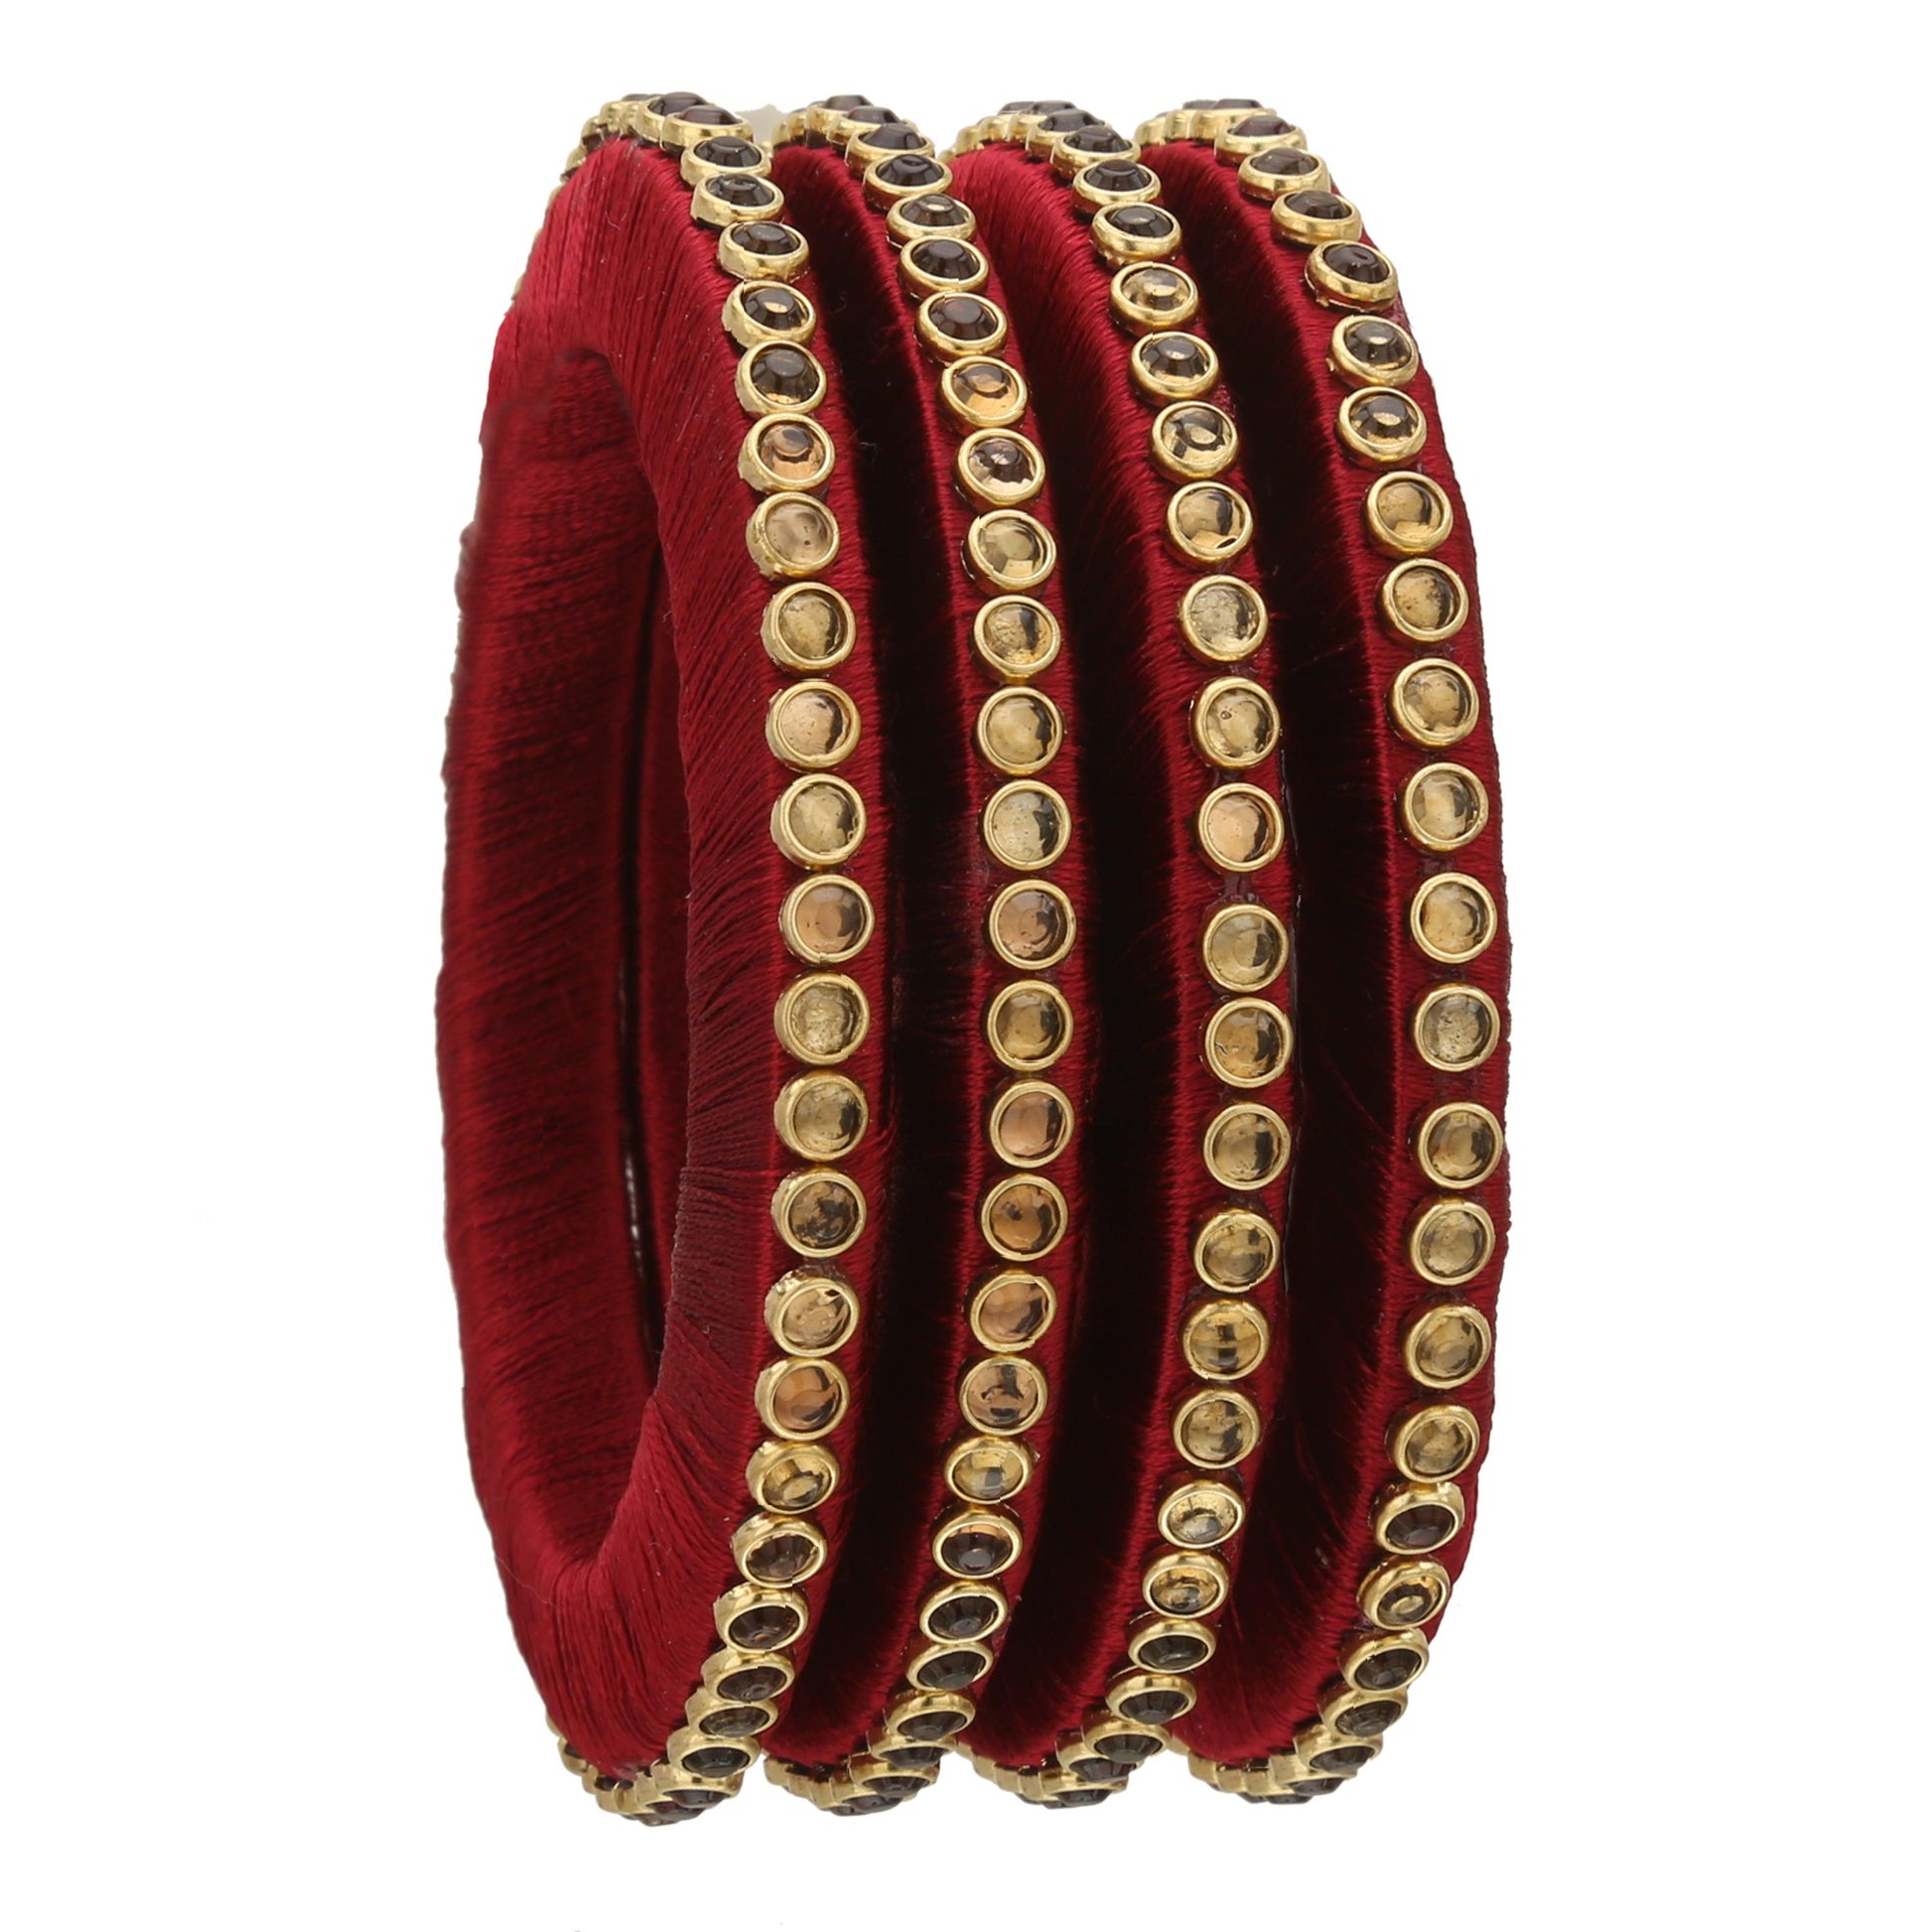 sukriti stylish handmade maroon flower designer silk thread plastic bridal chuda wedding bangles for women – set of 18